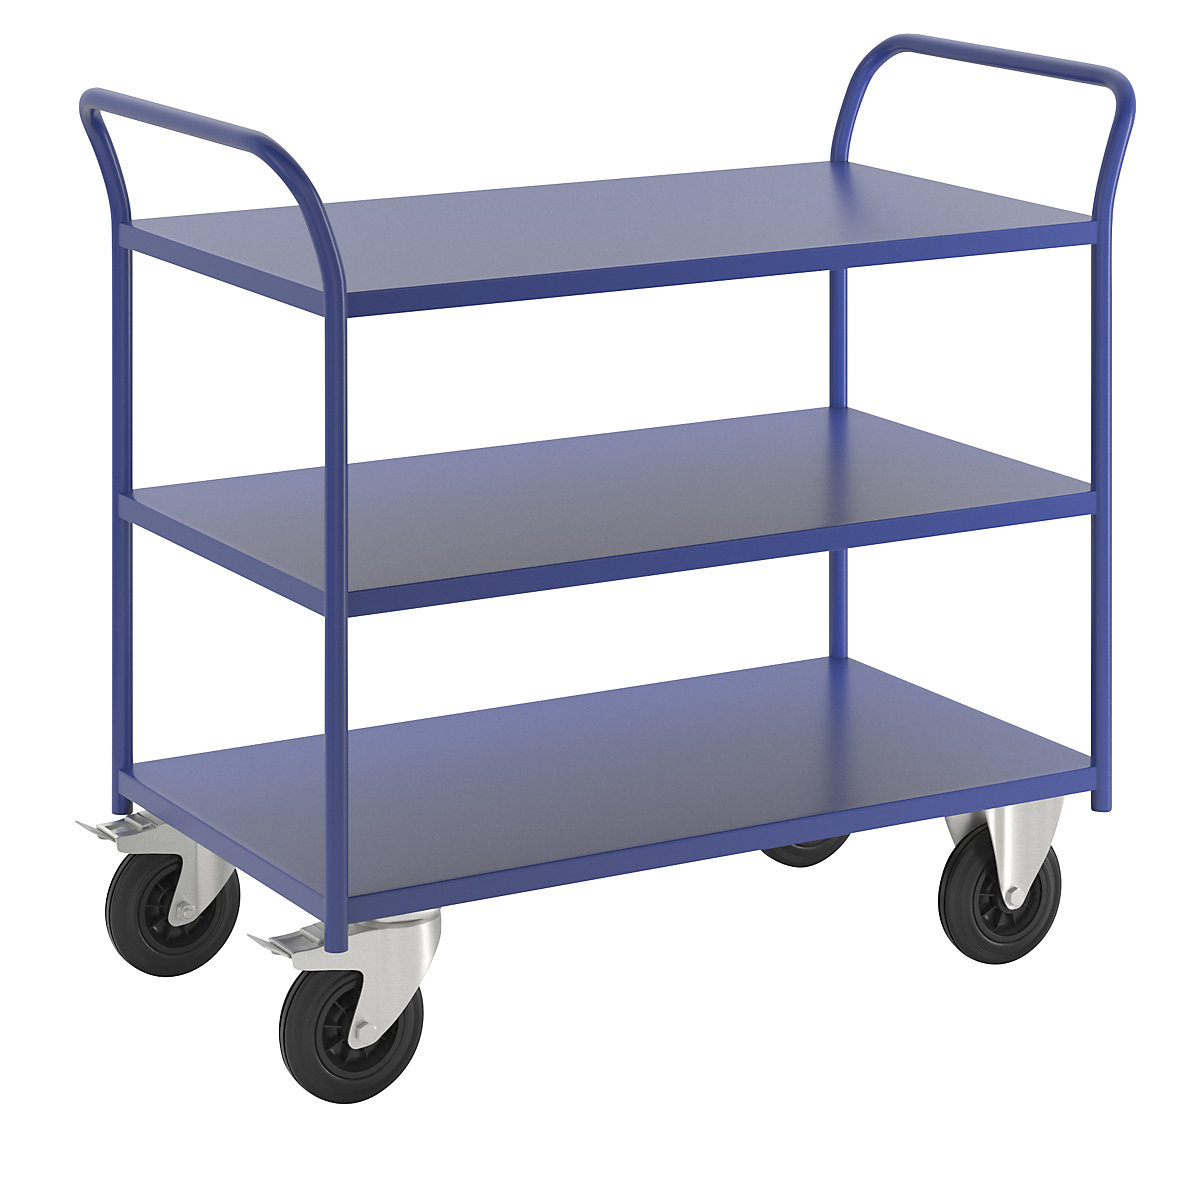 KM41 table trolley – Kongamek, 3 shelves, LxWxH 1070 x 550 x 975 mm, blue, 2 swivel castors with stops, 2 fixed castors-3